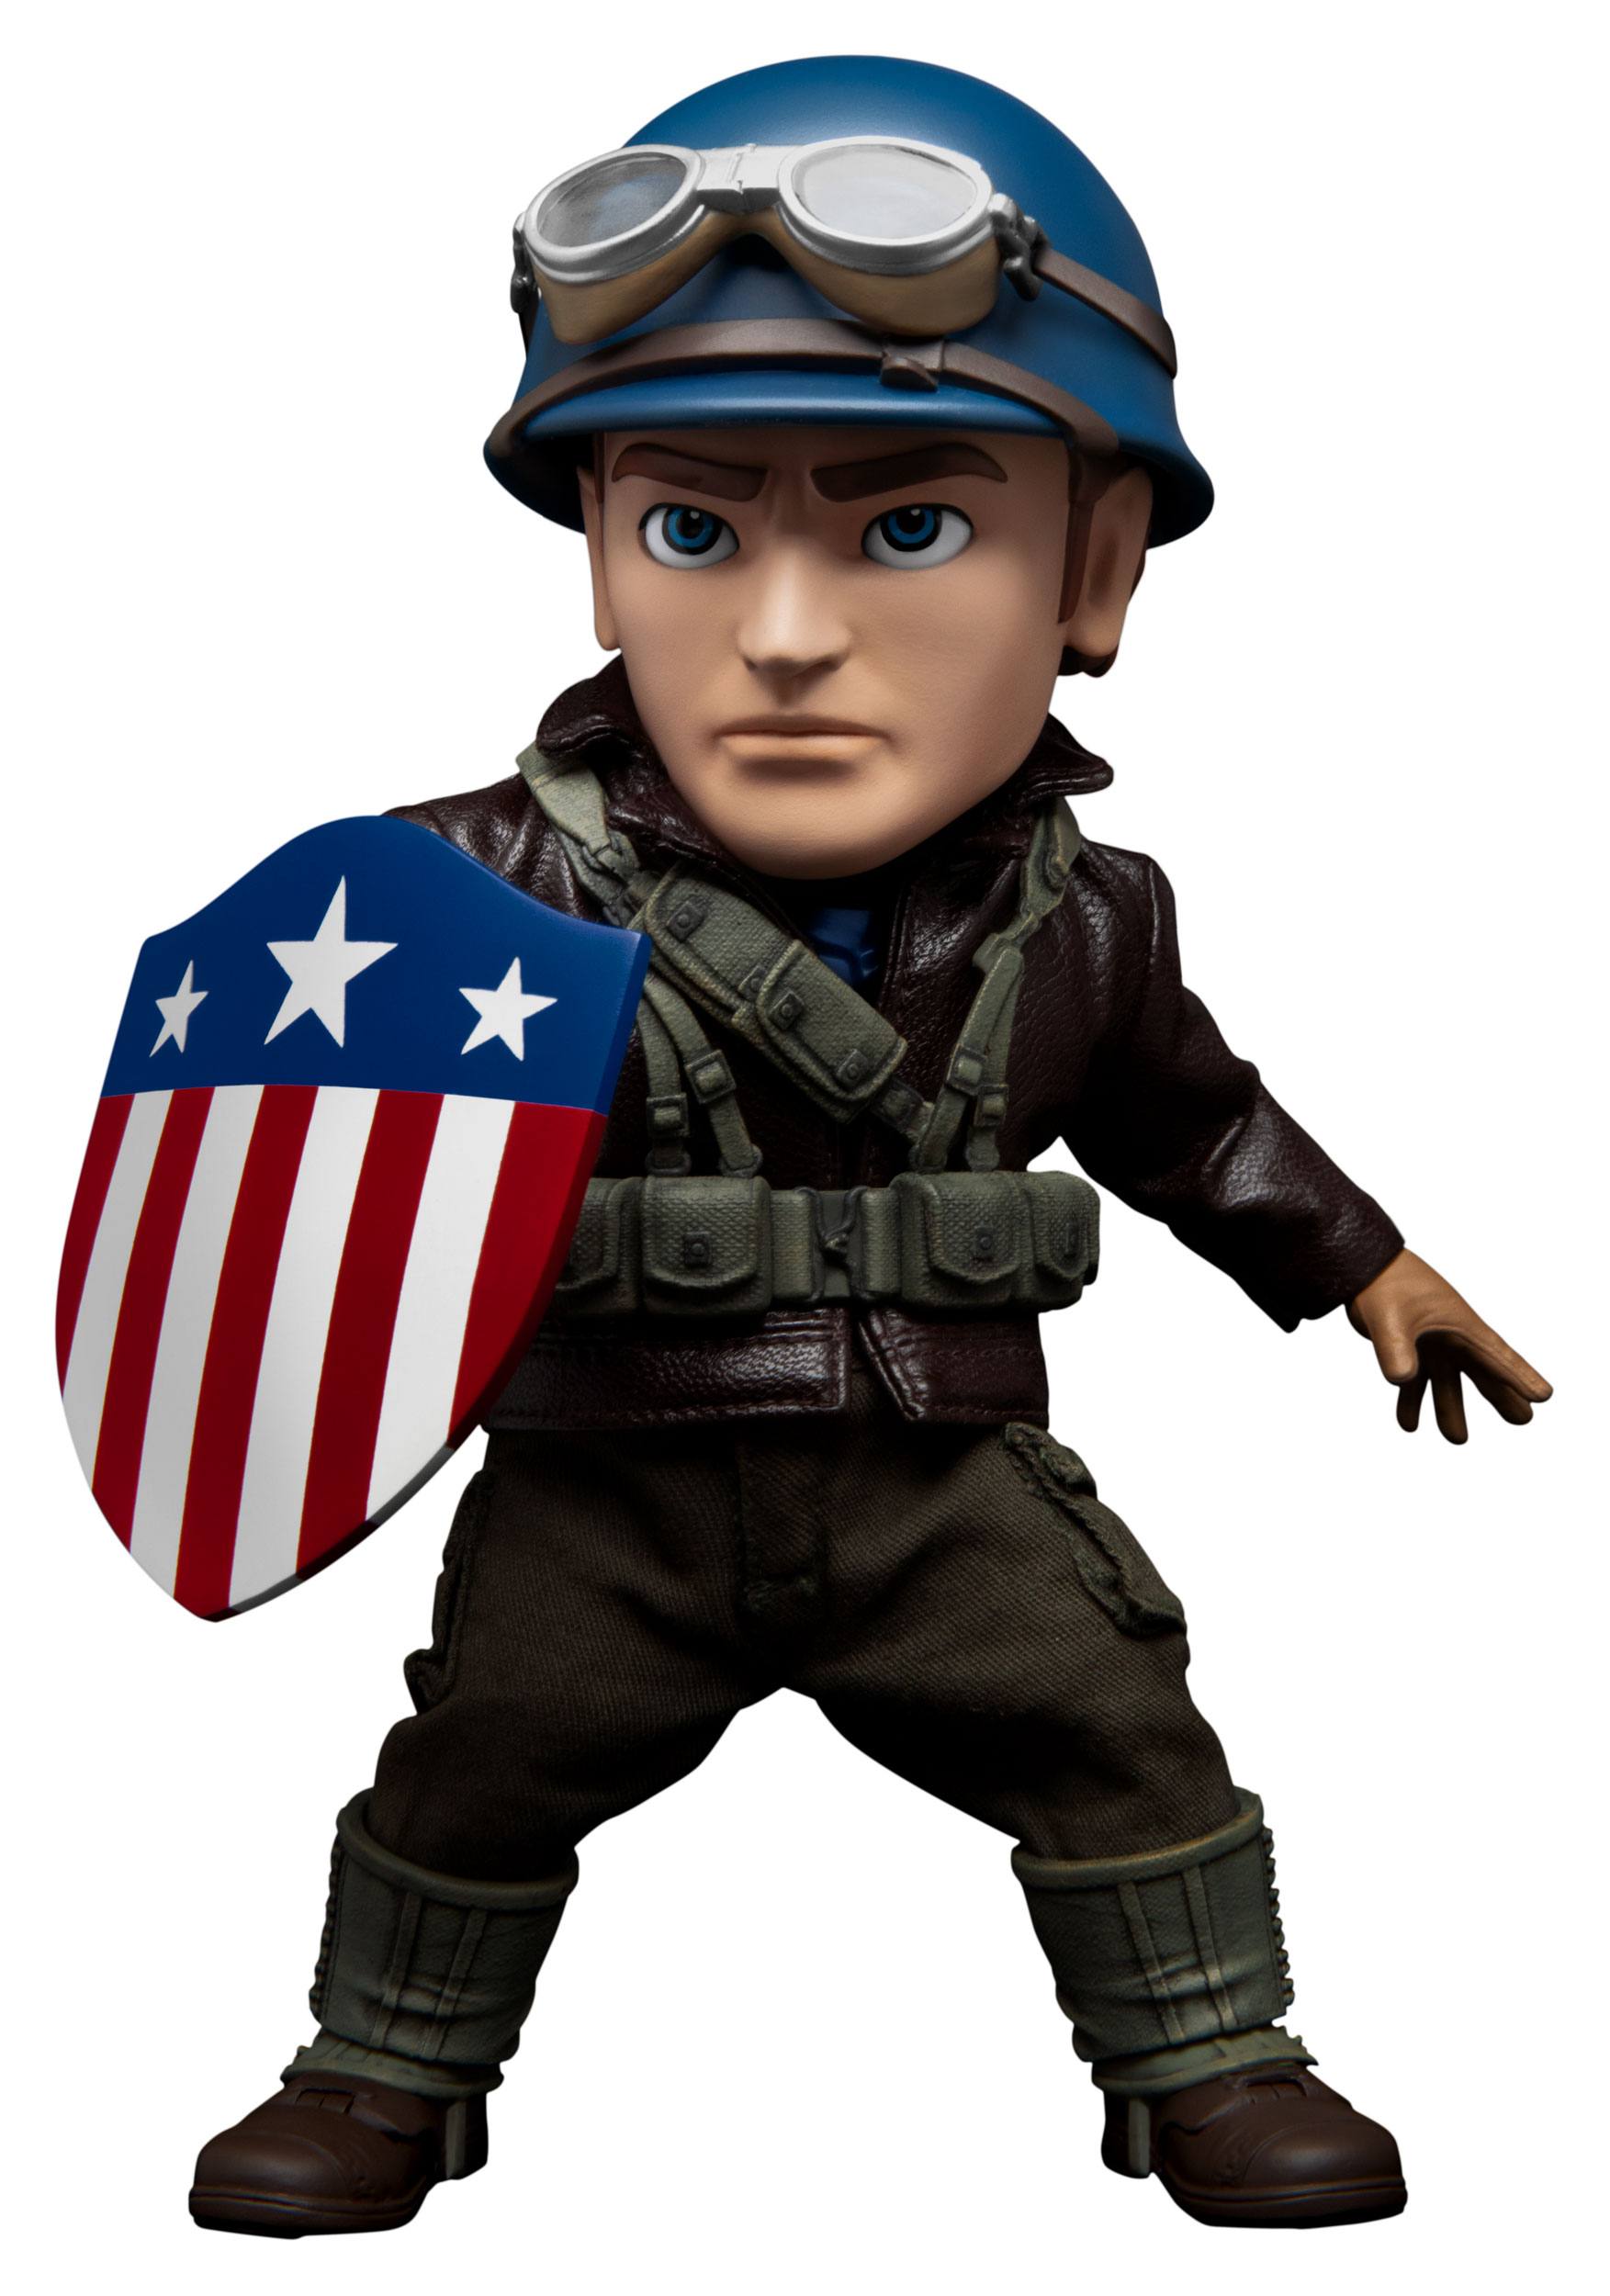 Captain America: The First Avenger Egg Attack Action Actionfigur Captain America DX Version 17 cm